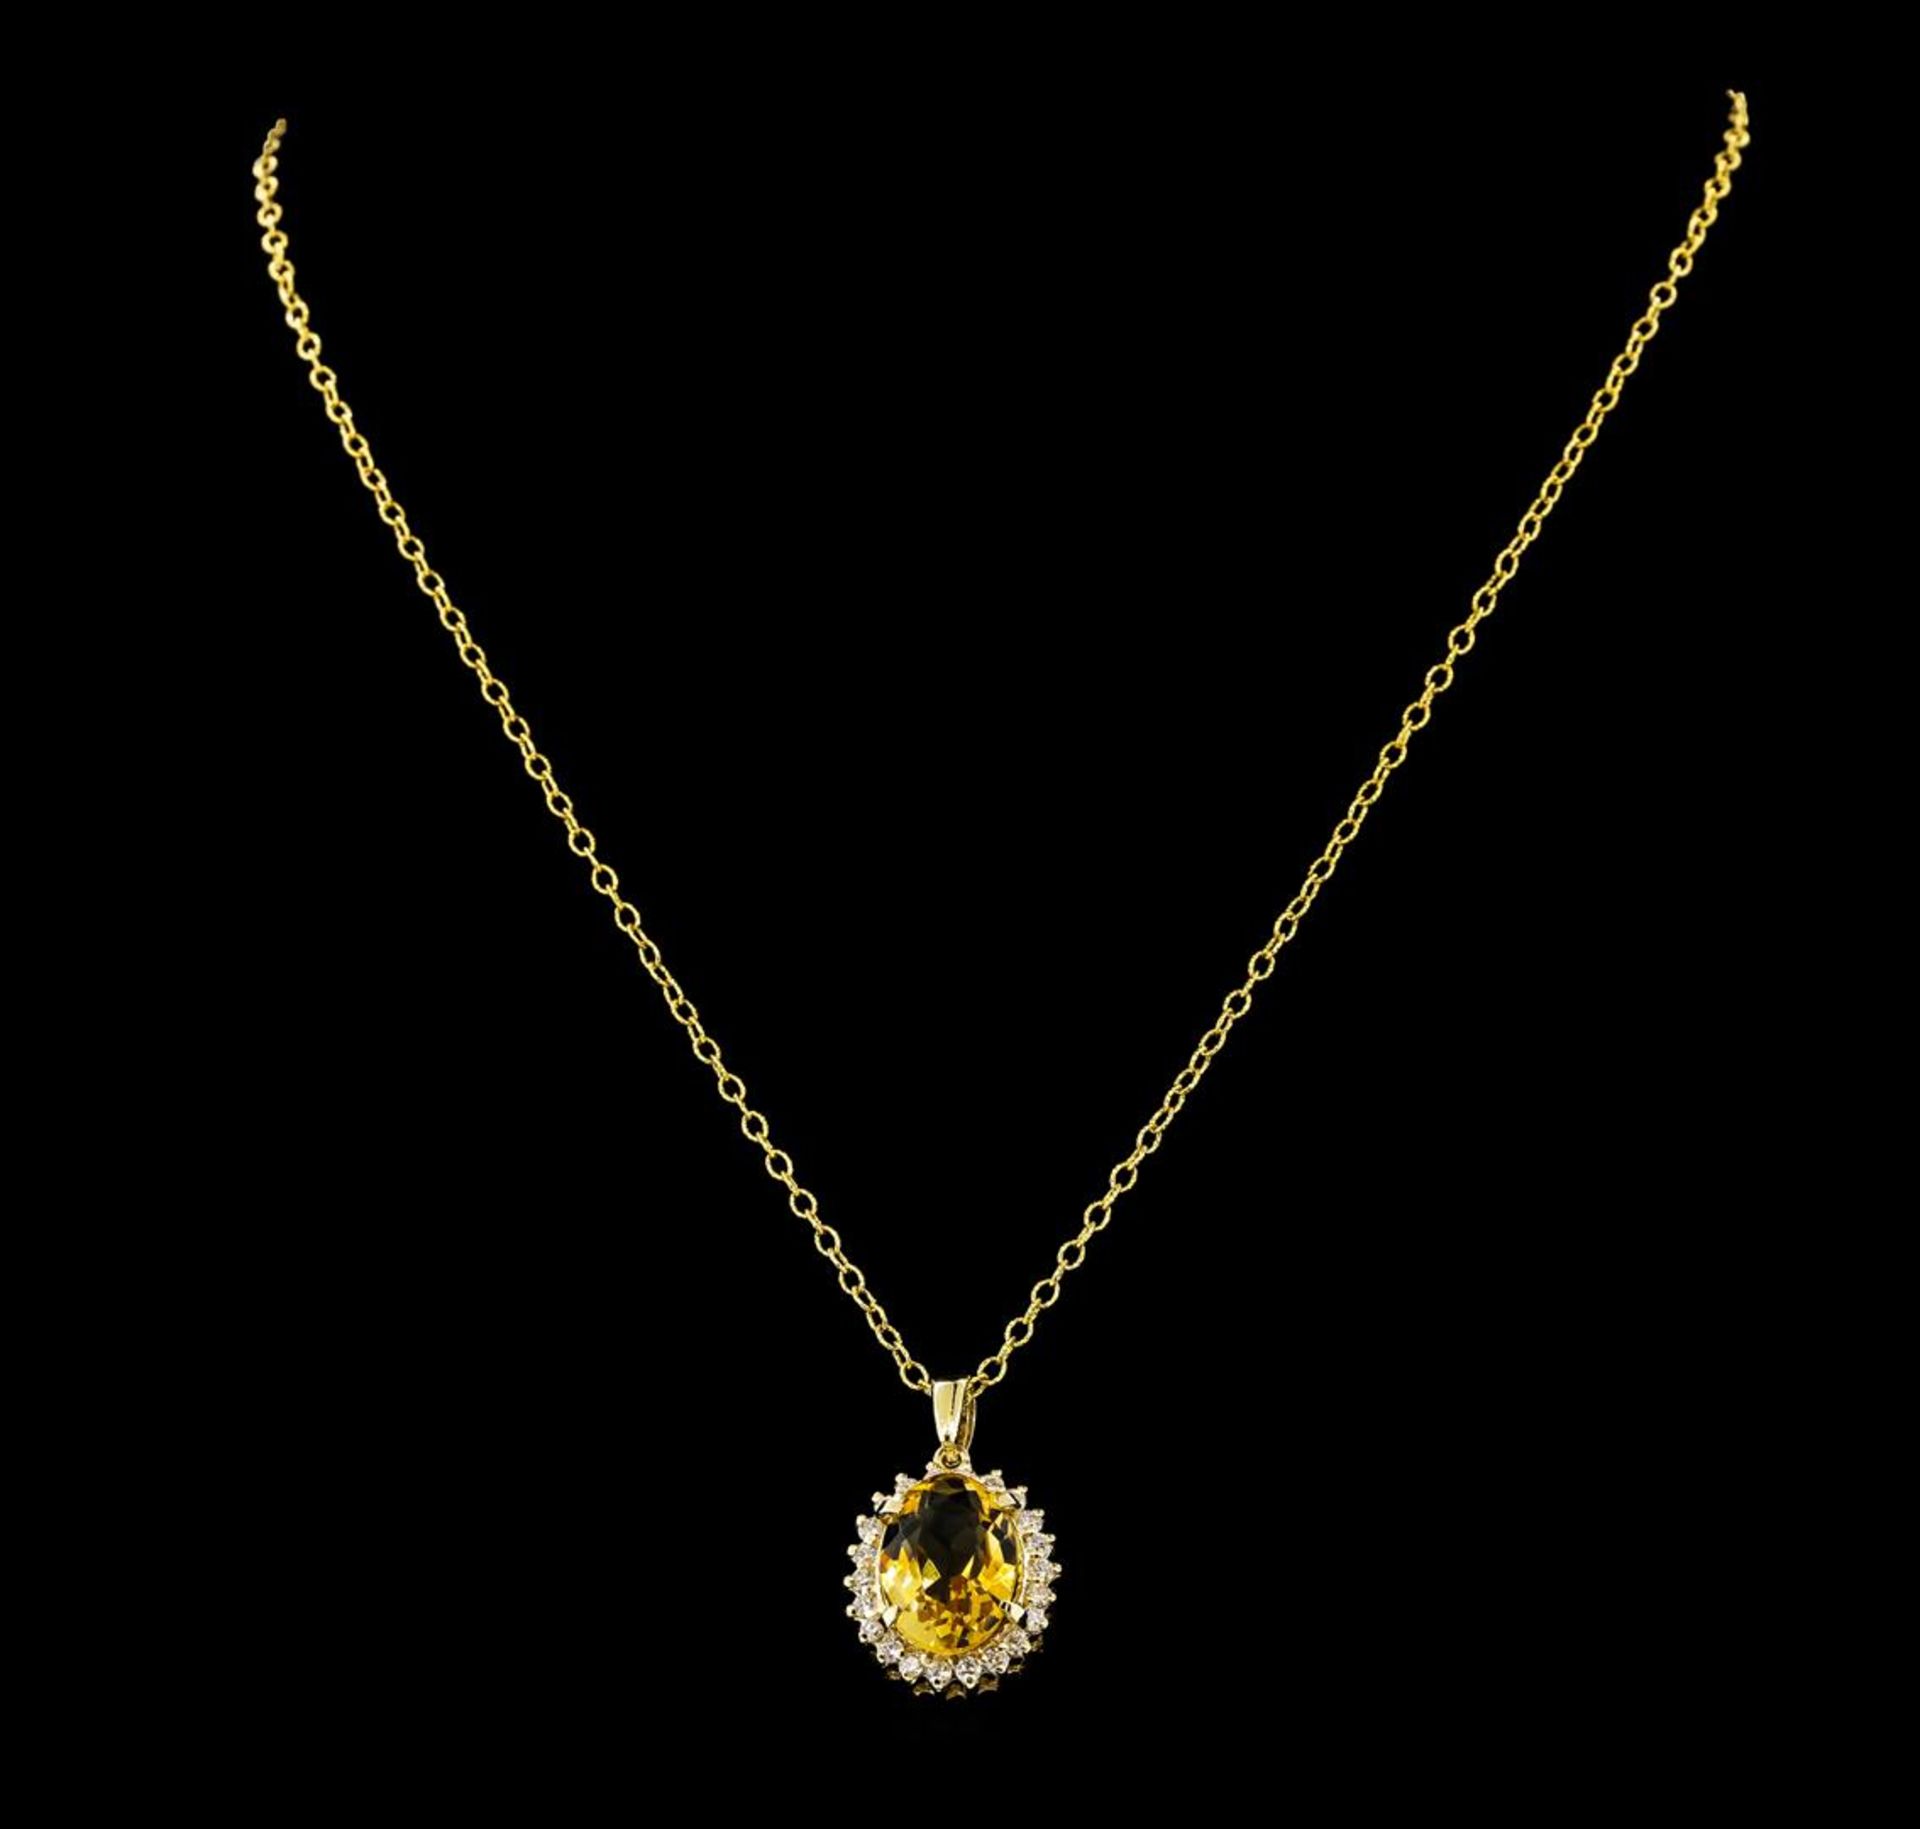 5.65 ctw Citrine Quartz and Diamond Pendant With Chain - 14KT Yellow Gold